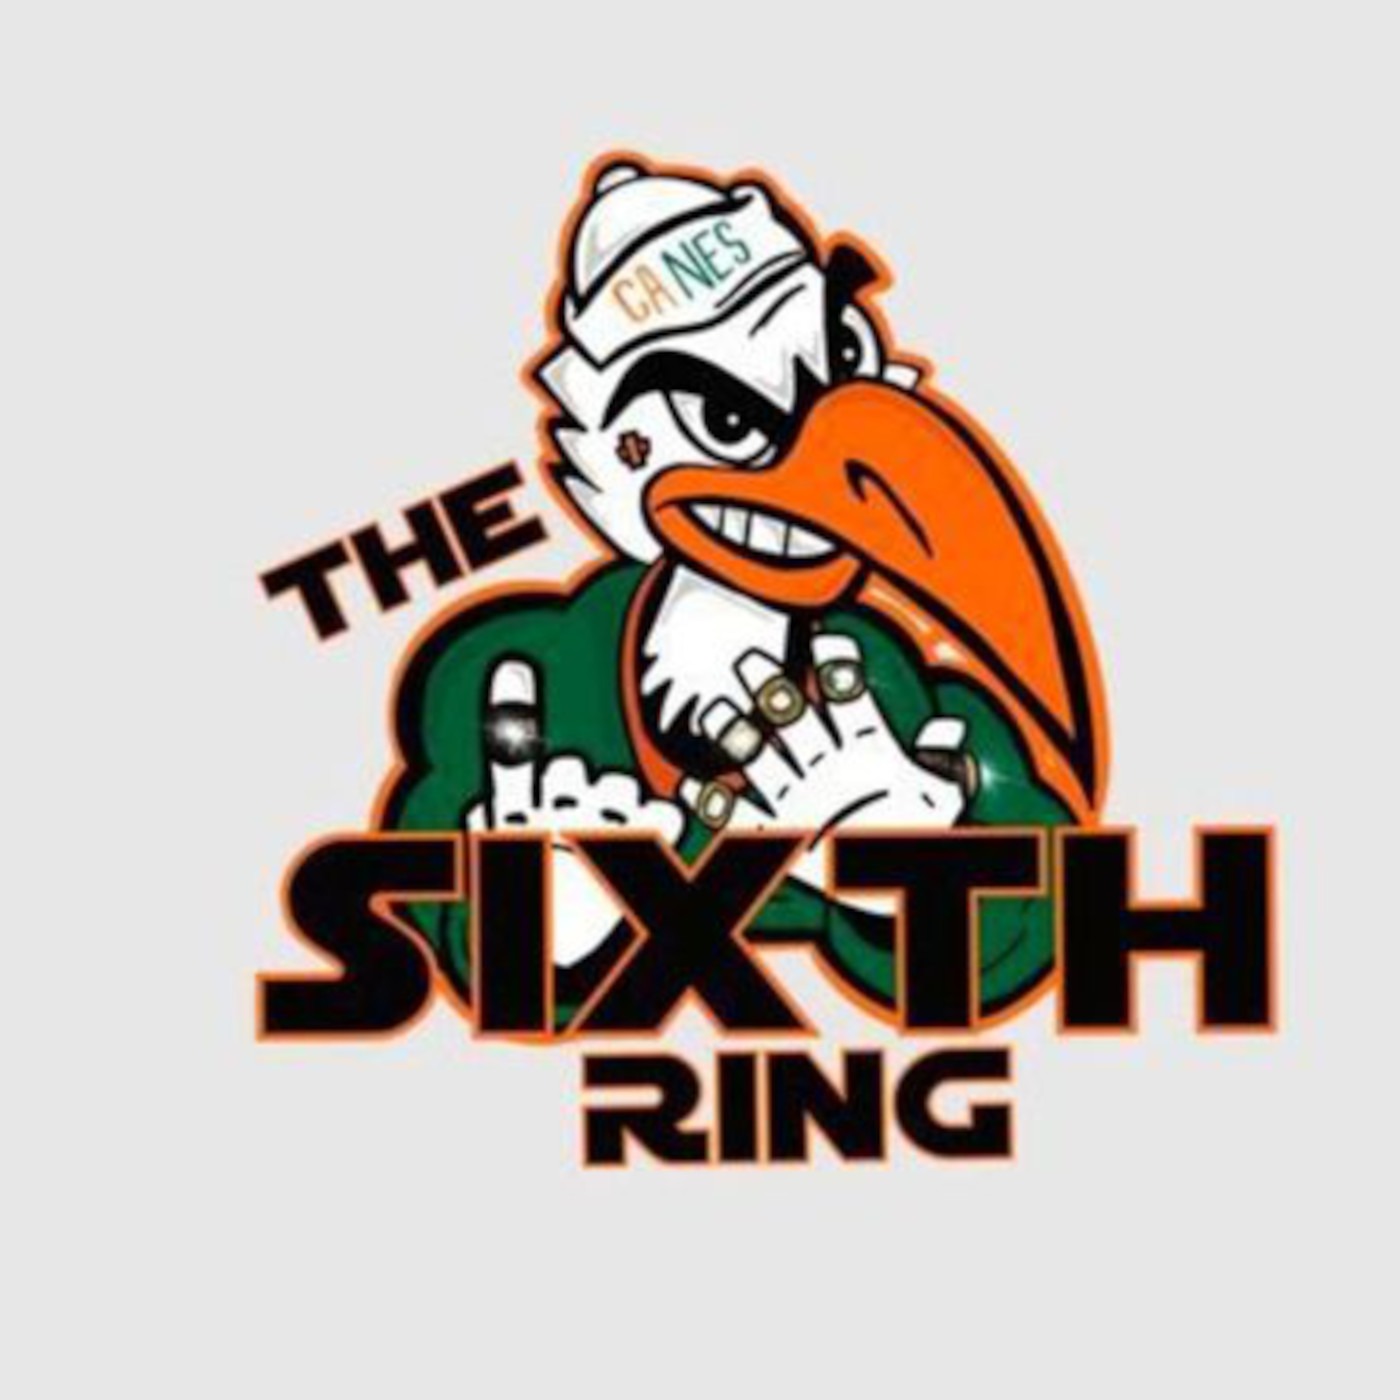 WRs, RBs, and Elijah Lofton | Sixth Ring Canes